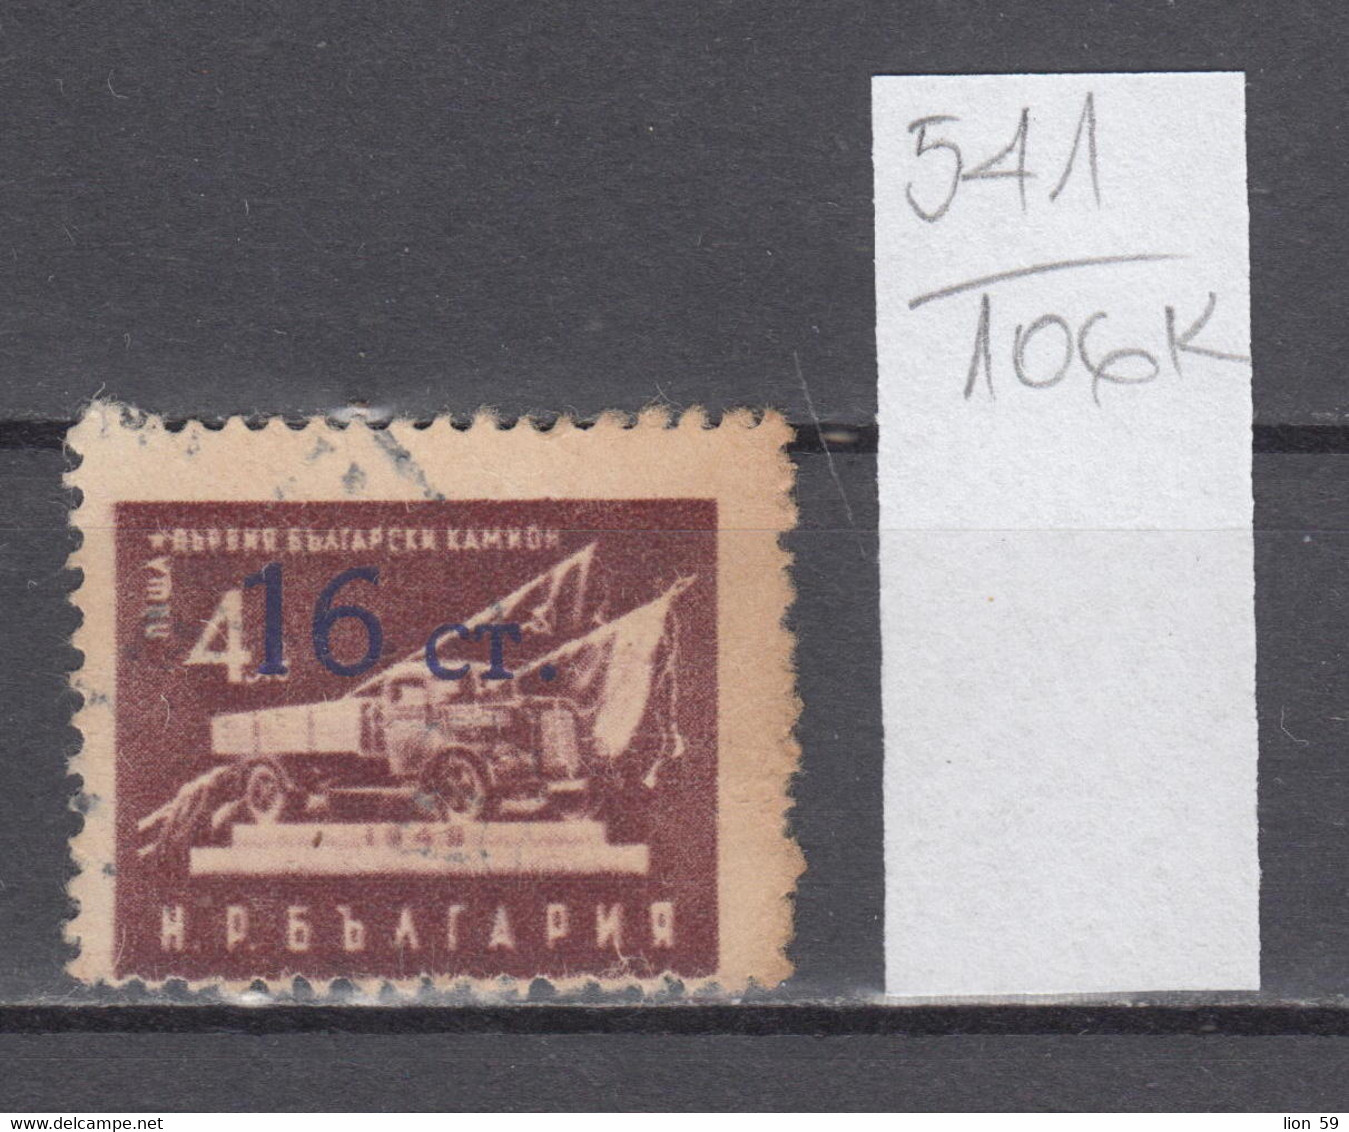 106K541 / ERROR Negative Bulgaria 1955 Michel Nr. 943 I+II Used ( O ) 16 St. / 4 Leva Truck Definitive Issue Overprinted - Variedades Y Curiosidades